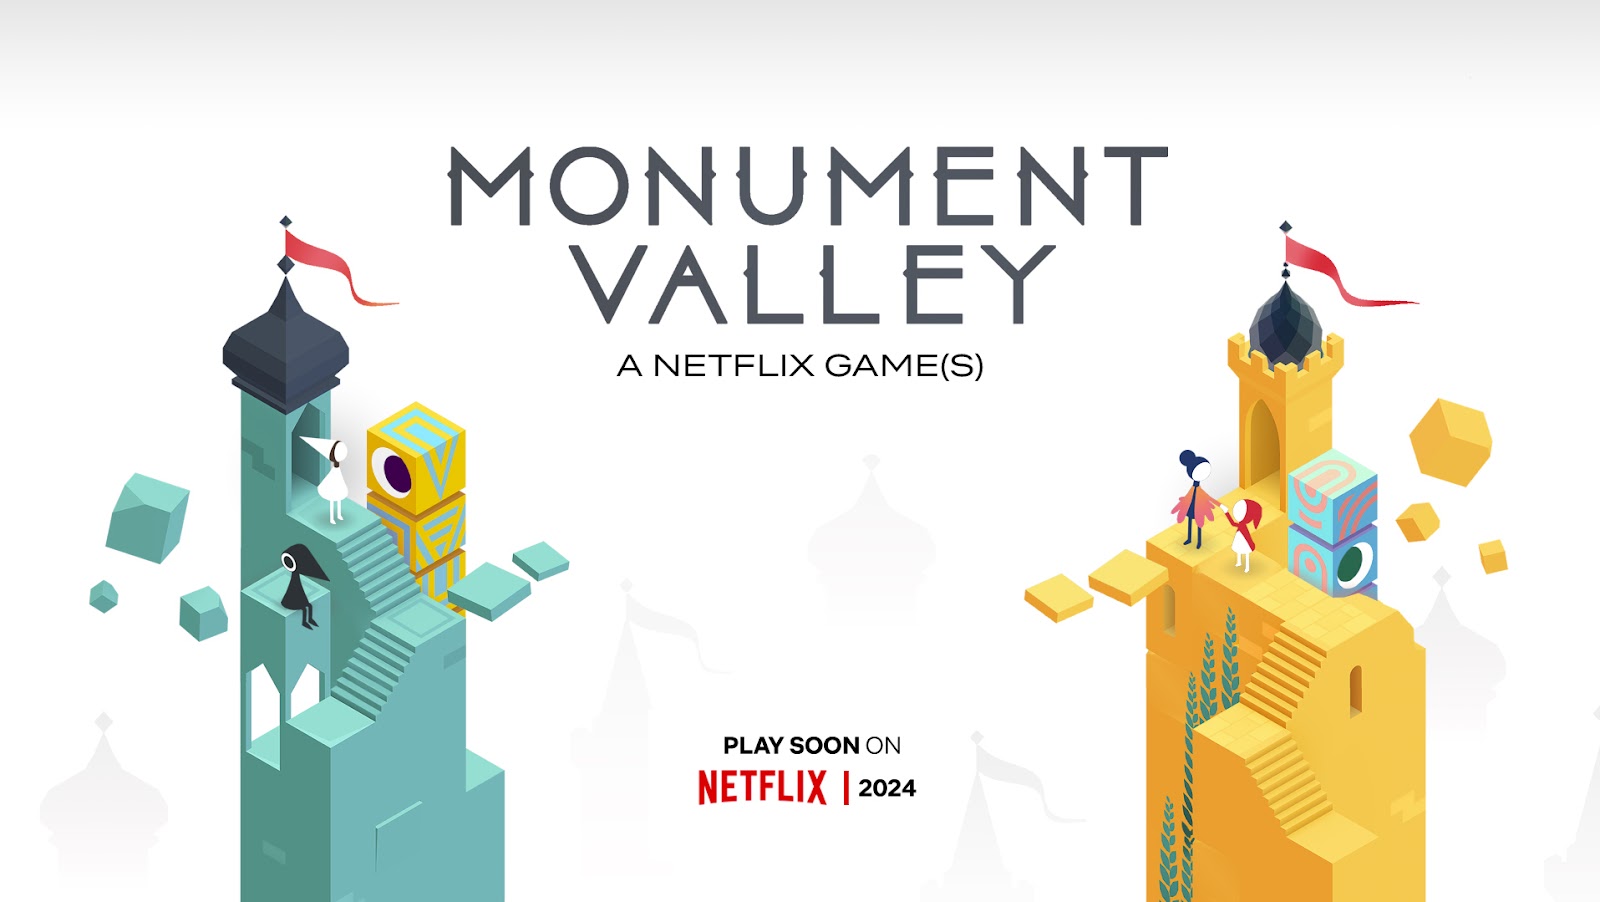 Netflix Monument Valley